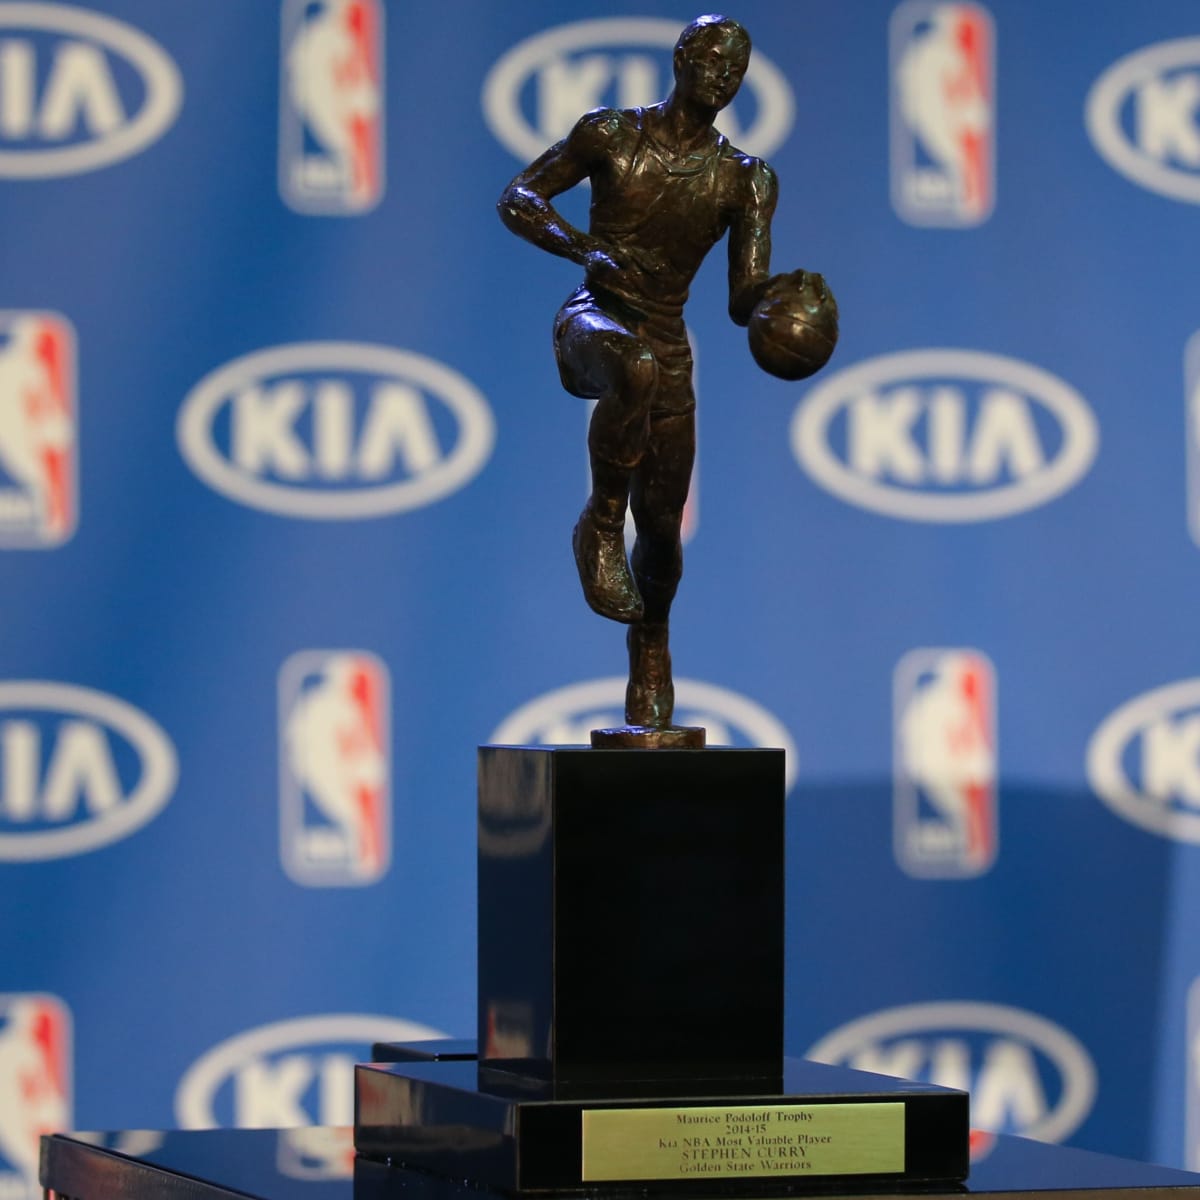 NBA Announces MVP Trophy Is Now Named After Michael Jordan